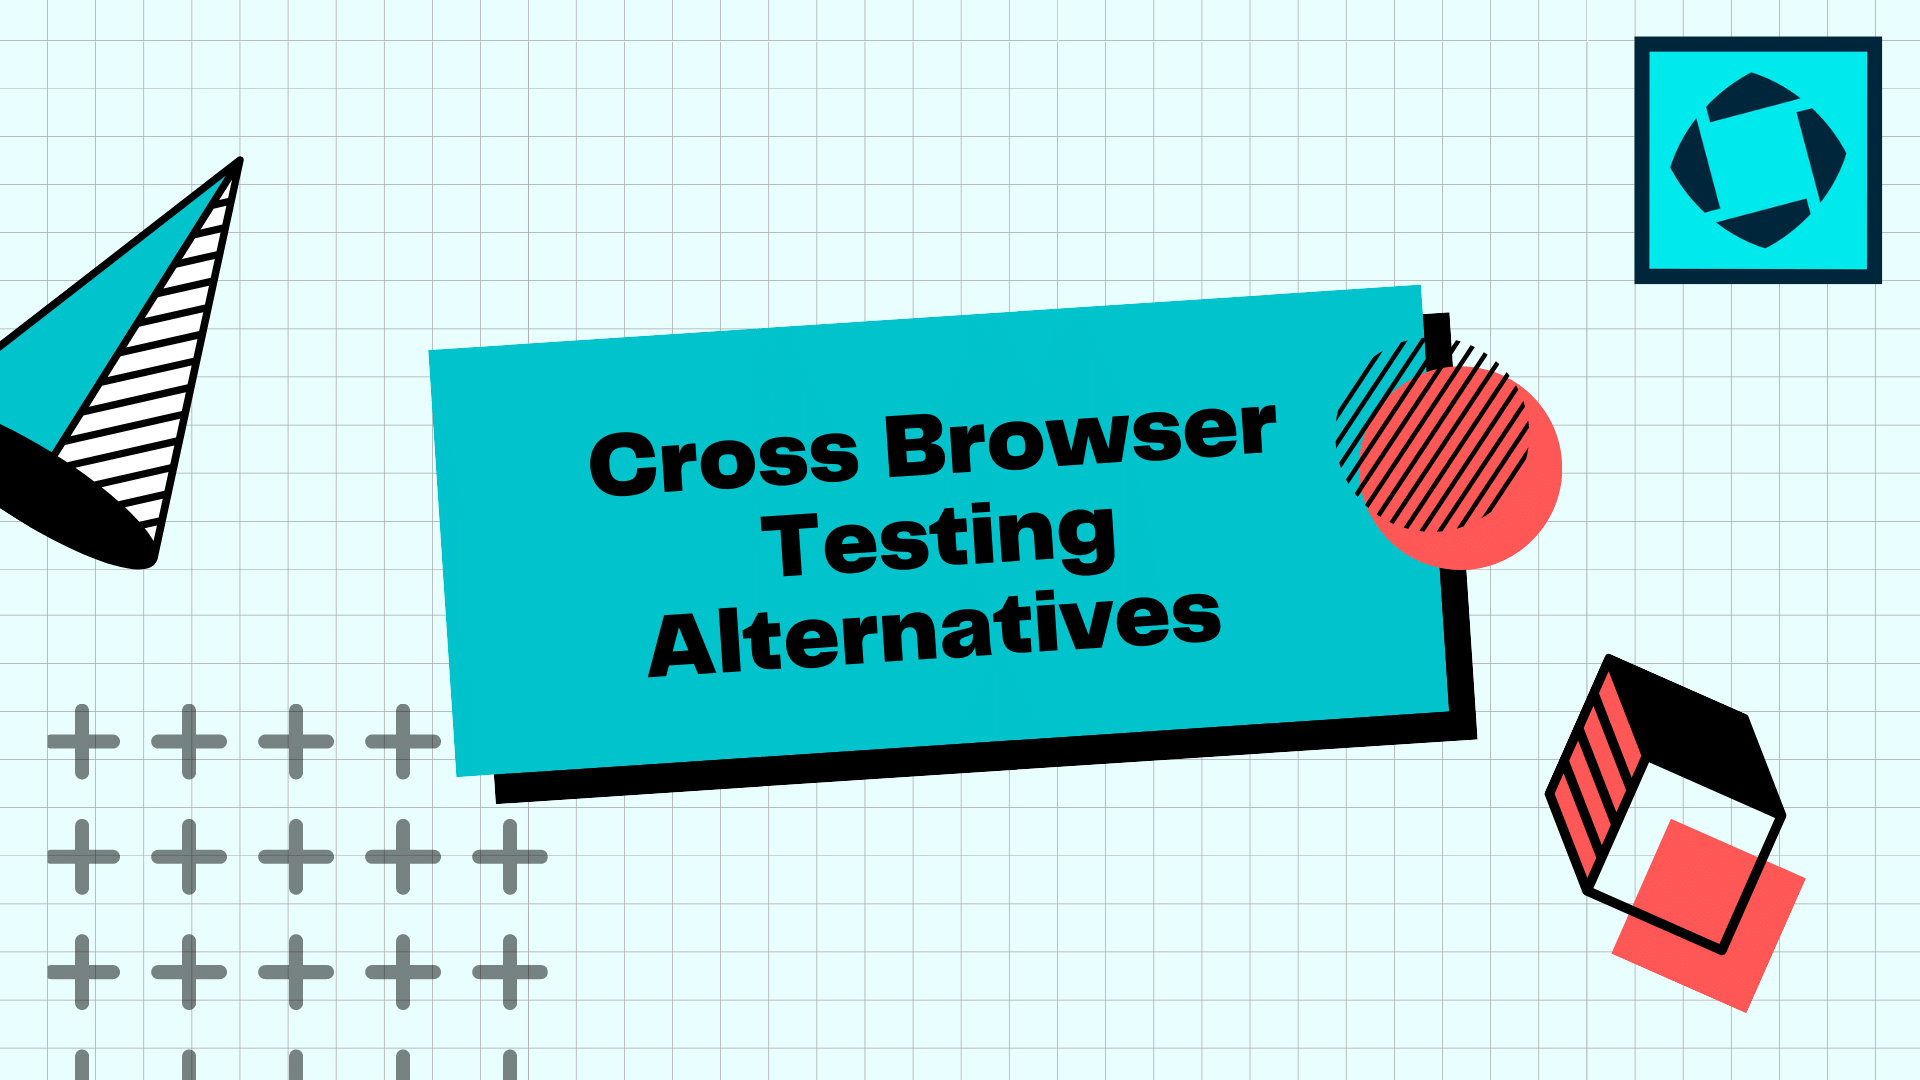 Cross Browser Testing Alternatives